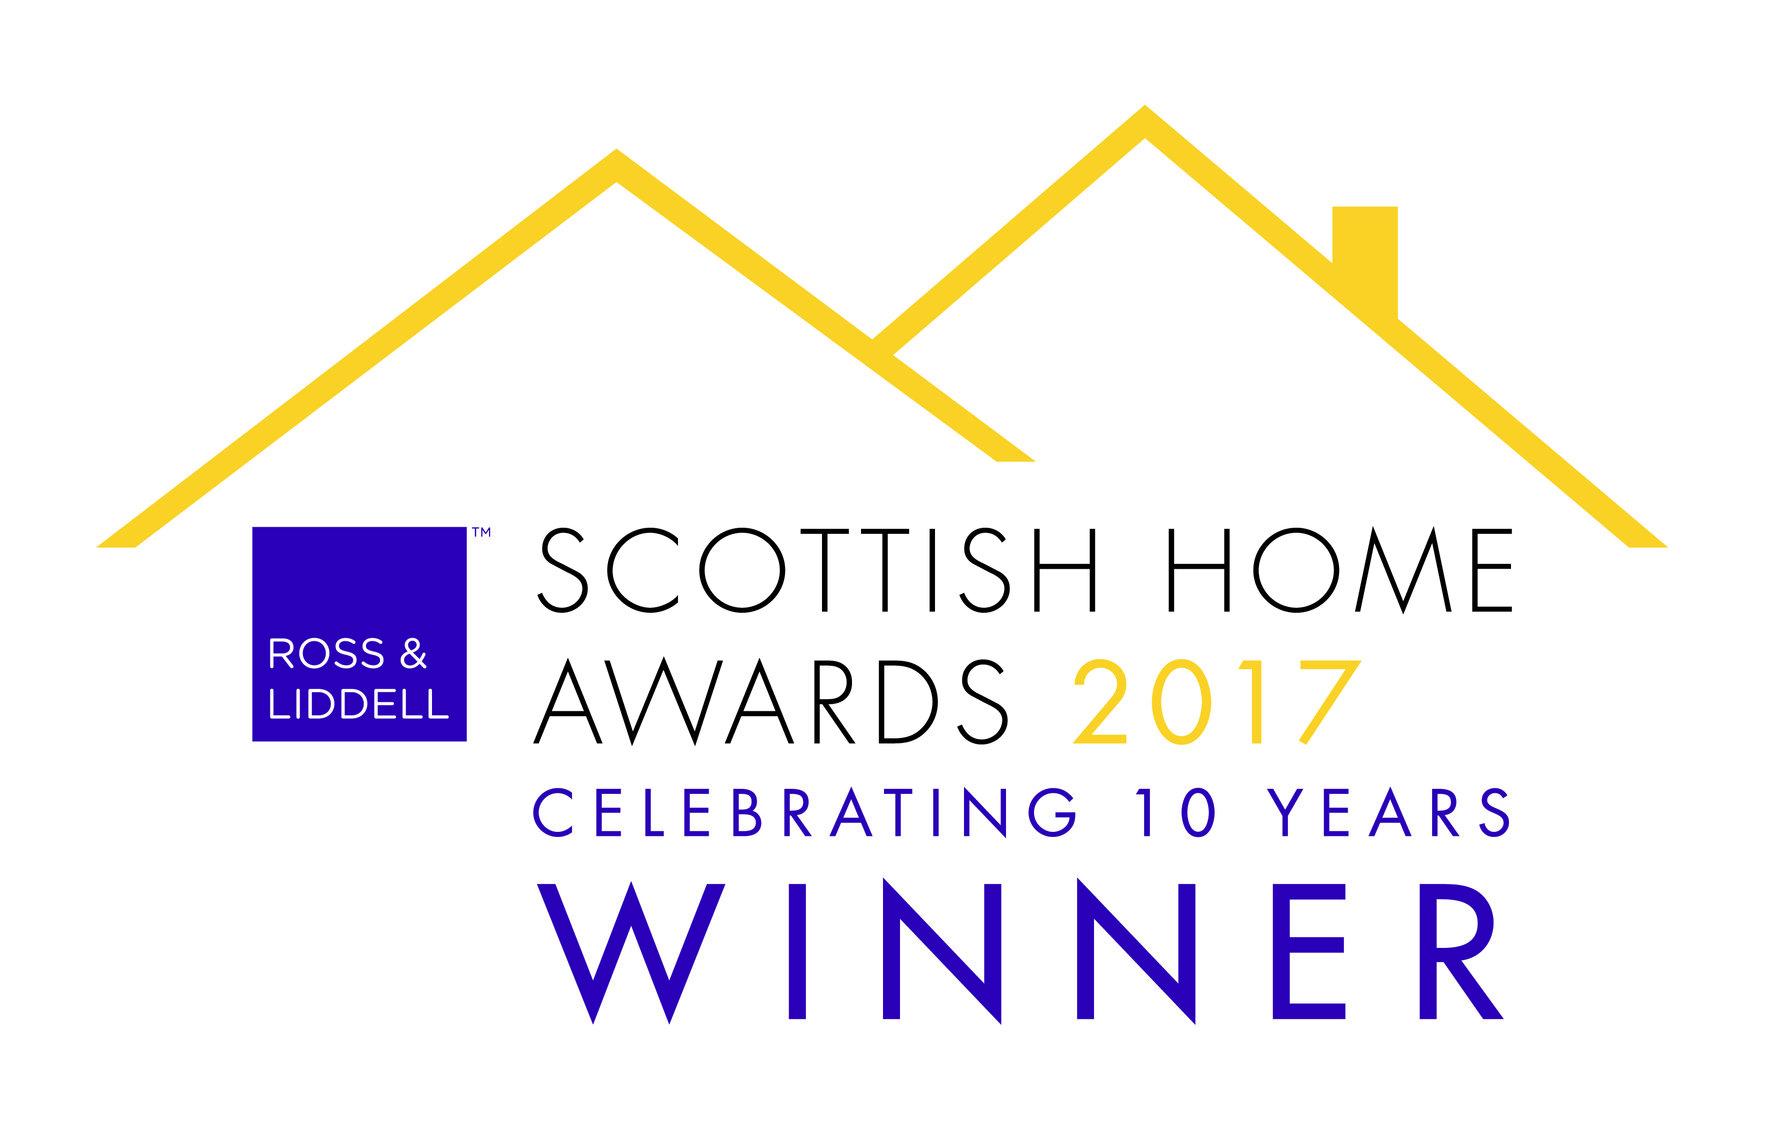 Scottish Home Awards Winners 2017 Logo - resized